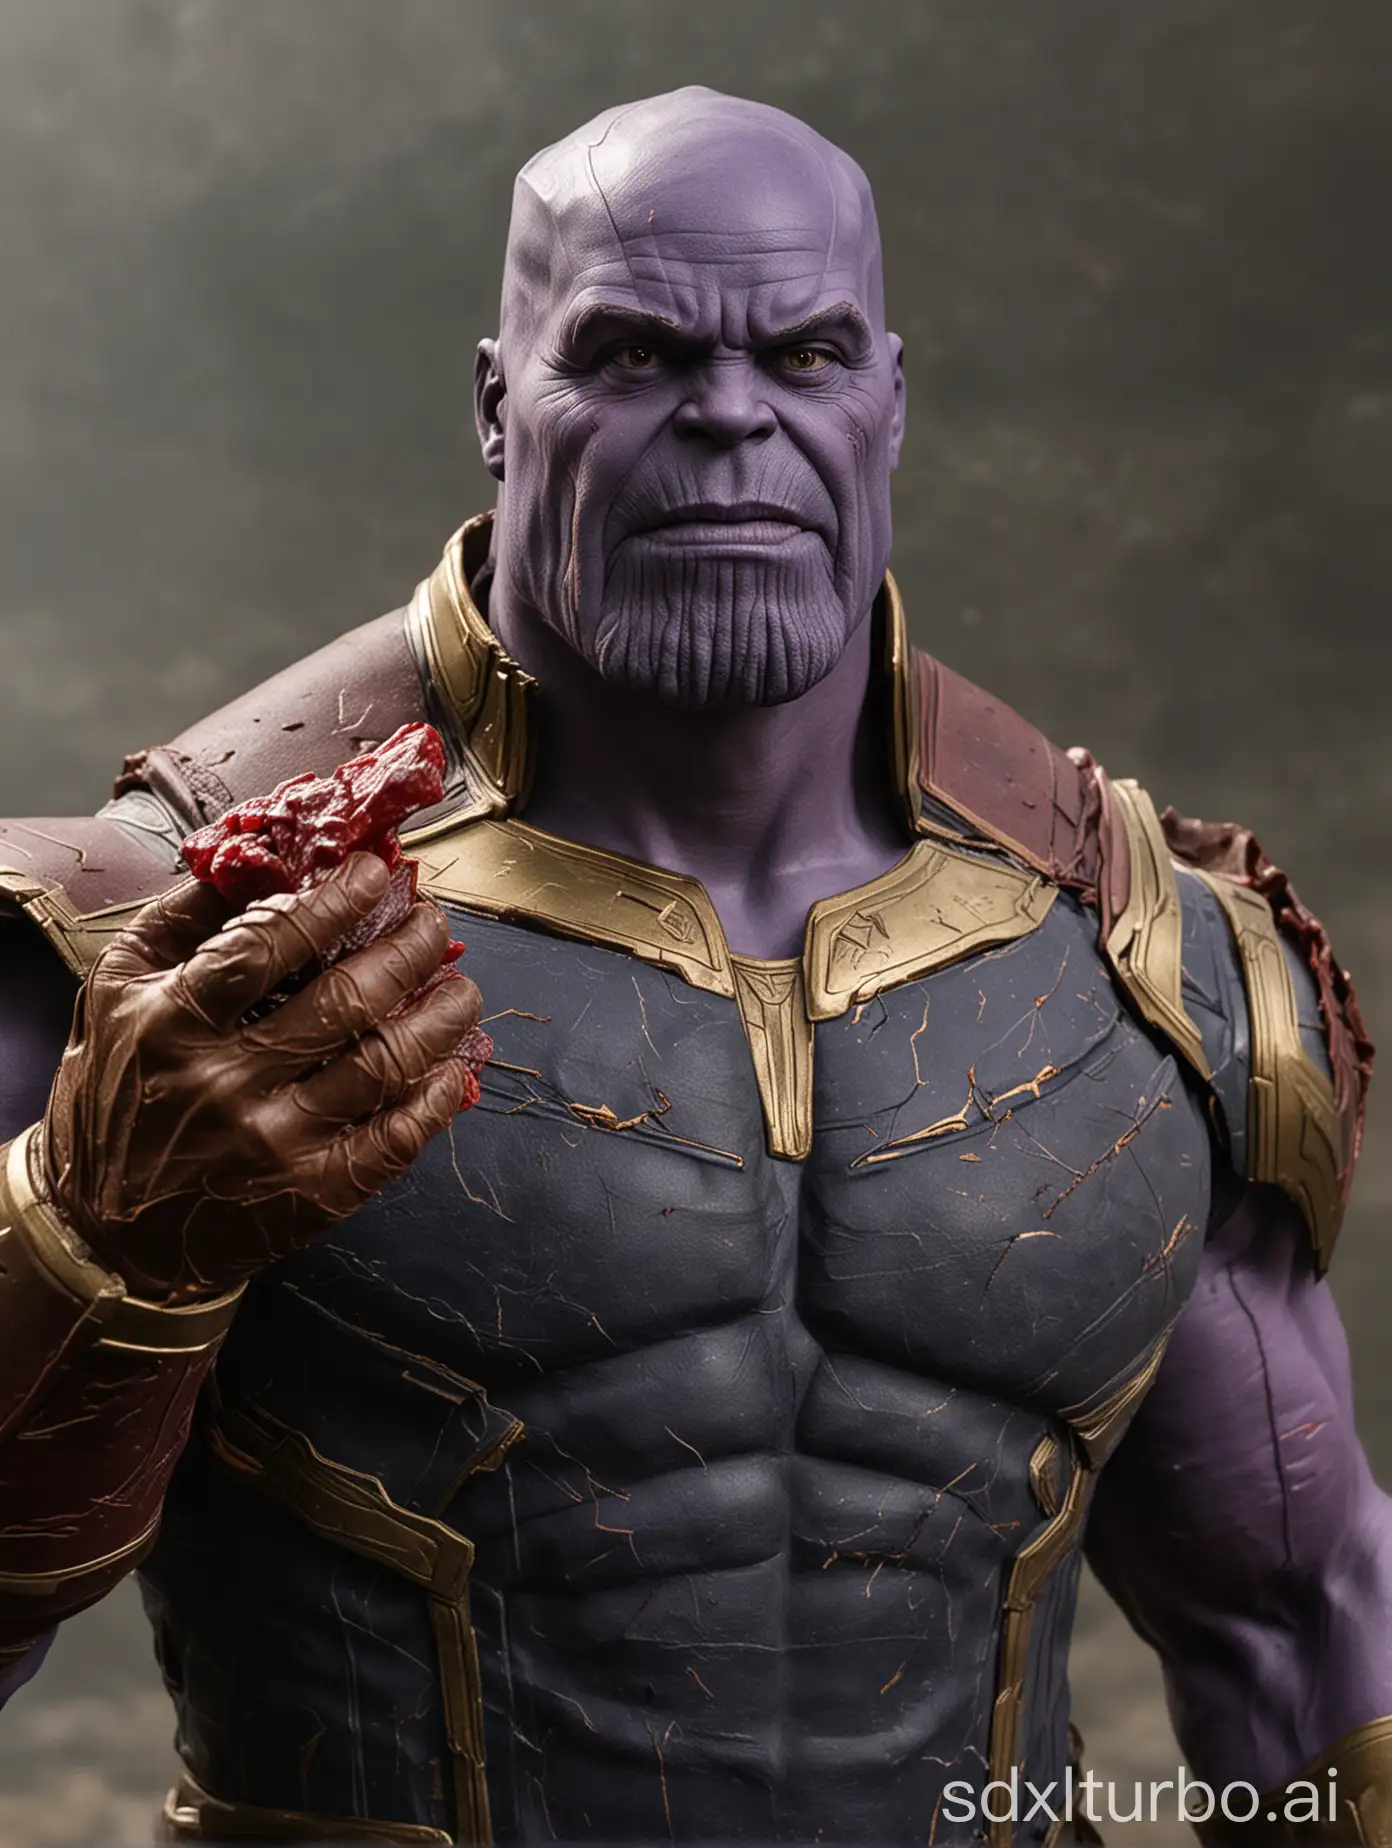 Marvel movie character ‘Thanos’ holding beef jerky